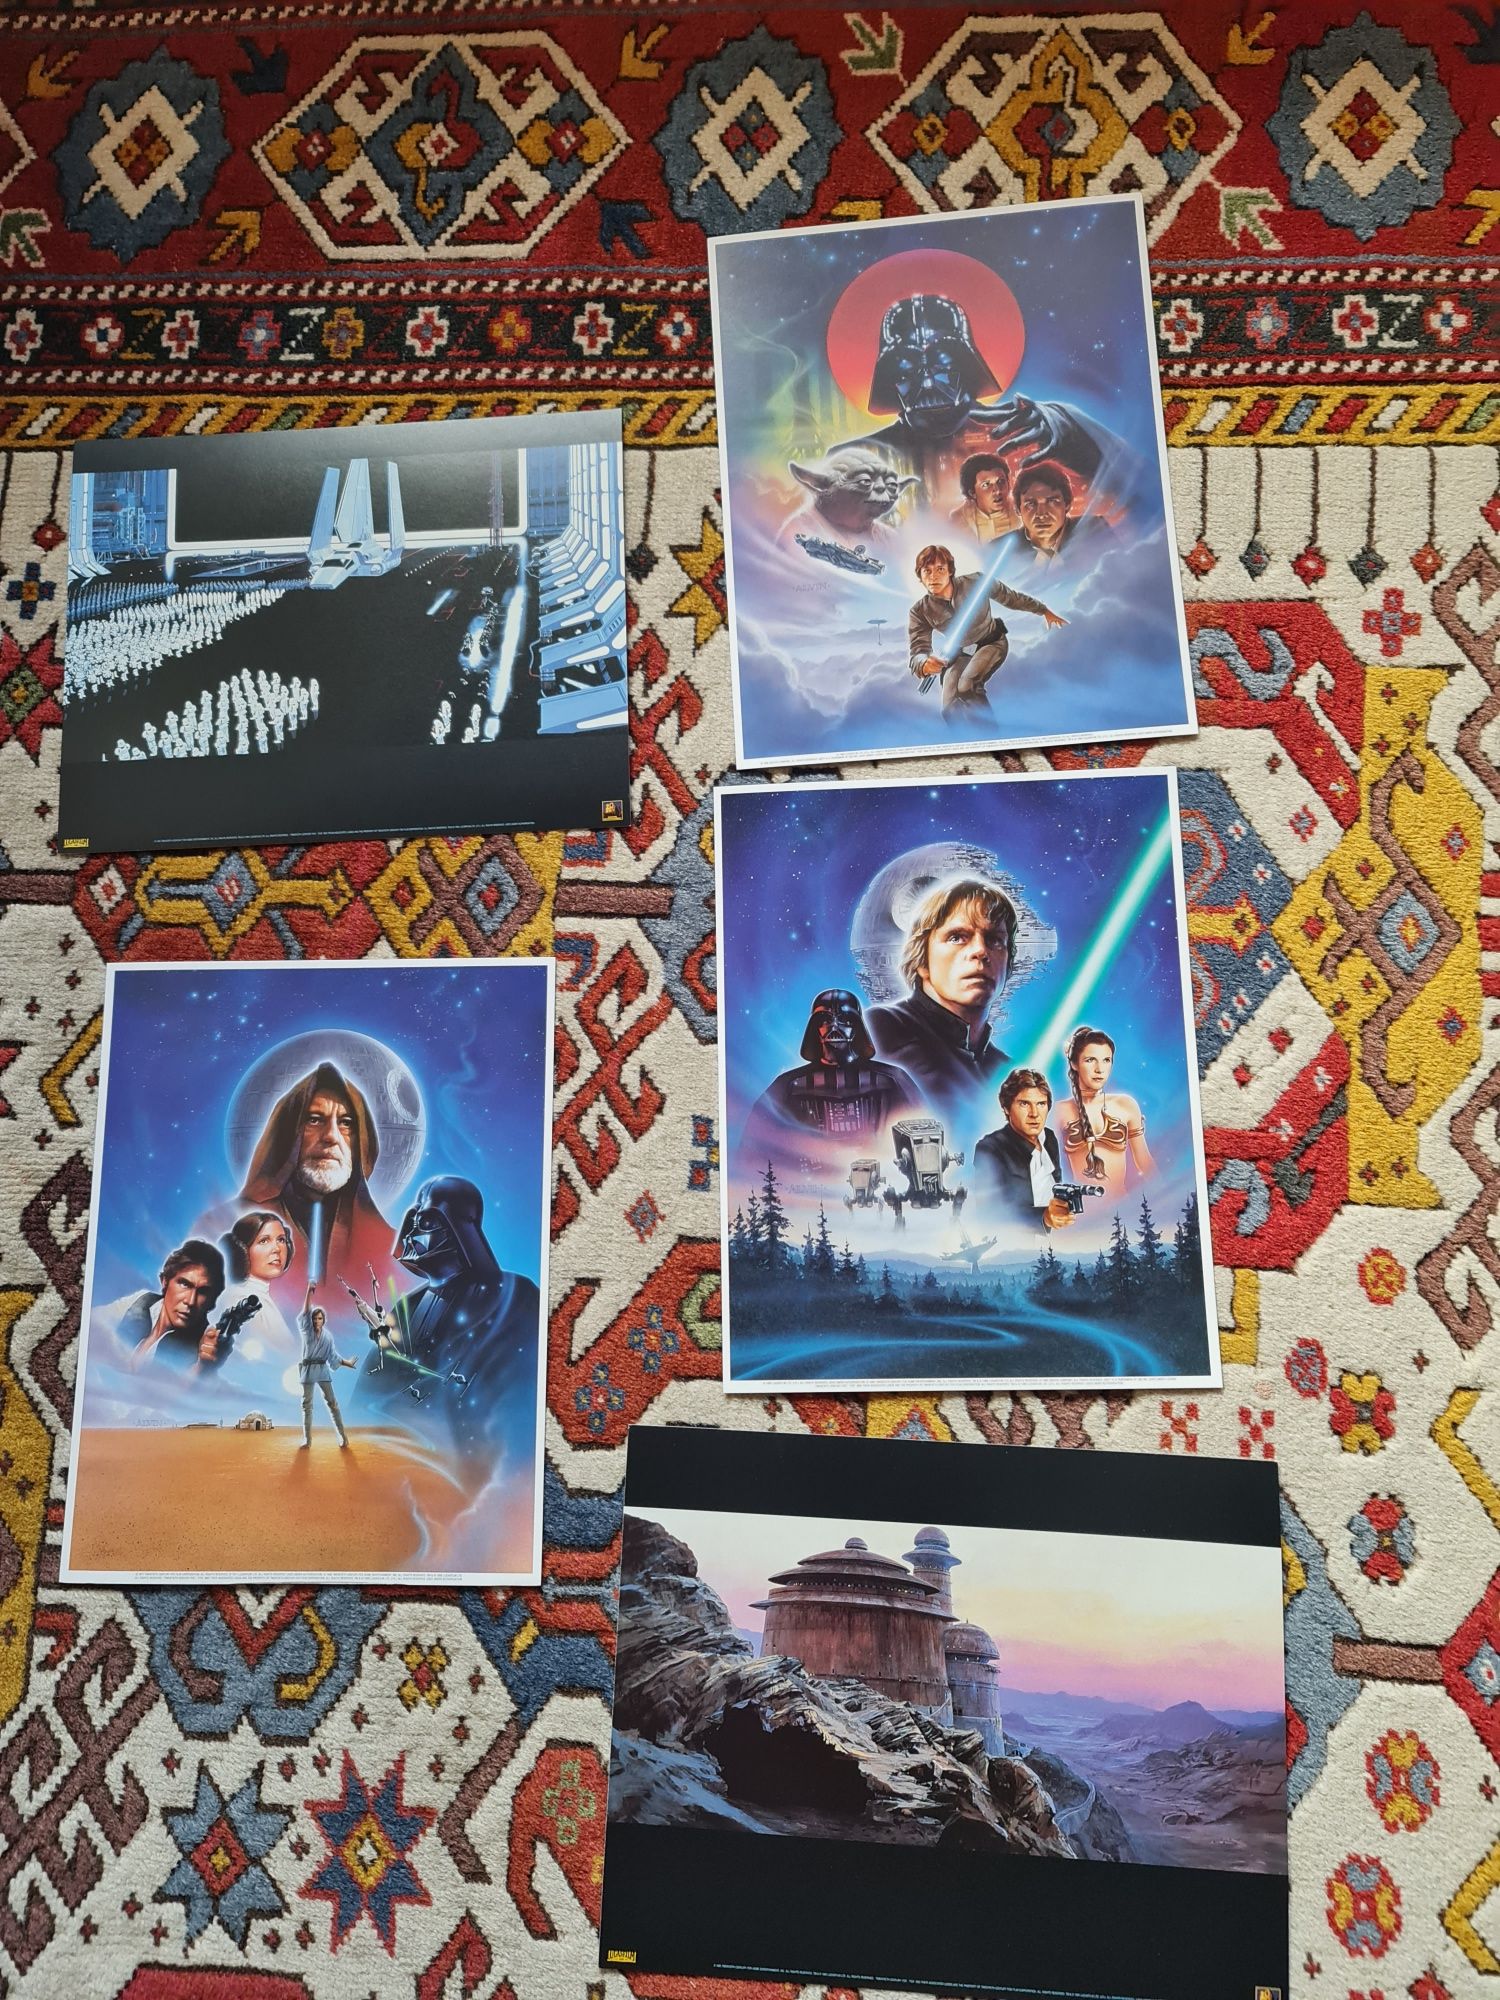 Triologia STAR WARS em Laser Discs - 6 discos, 3 filmes e posters